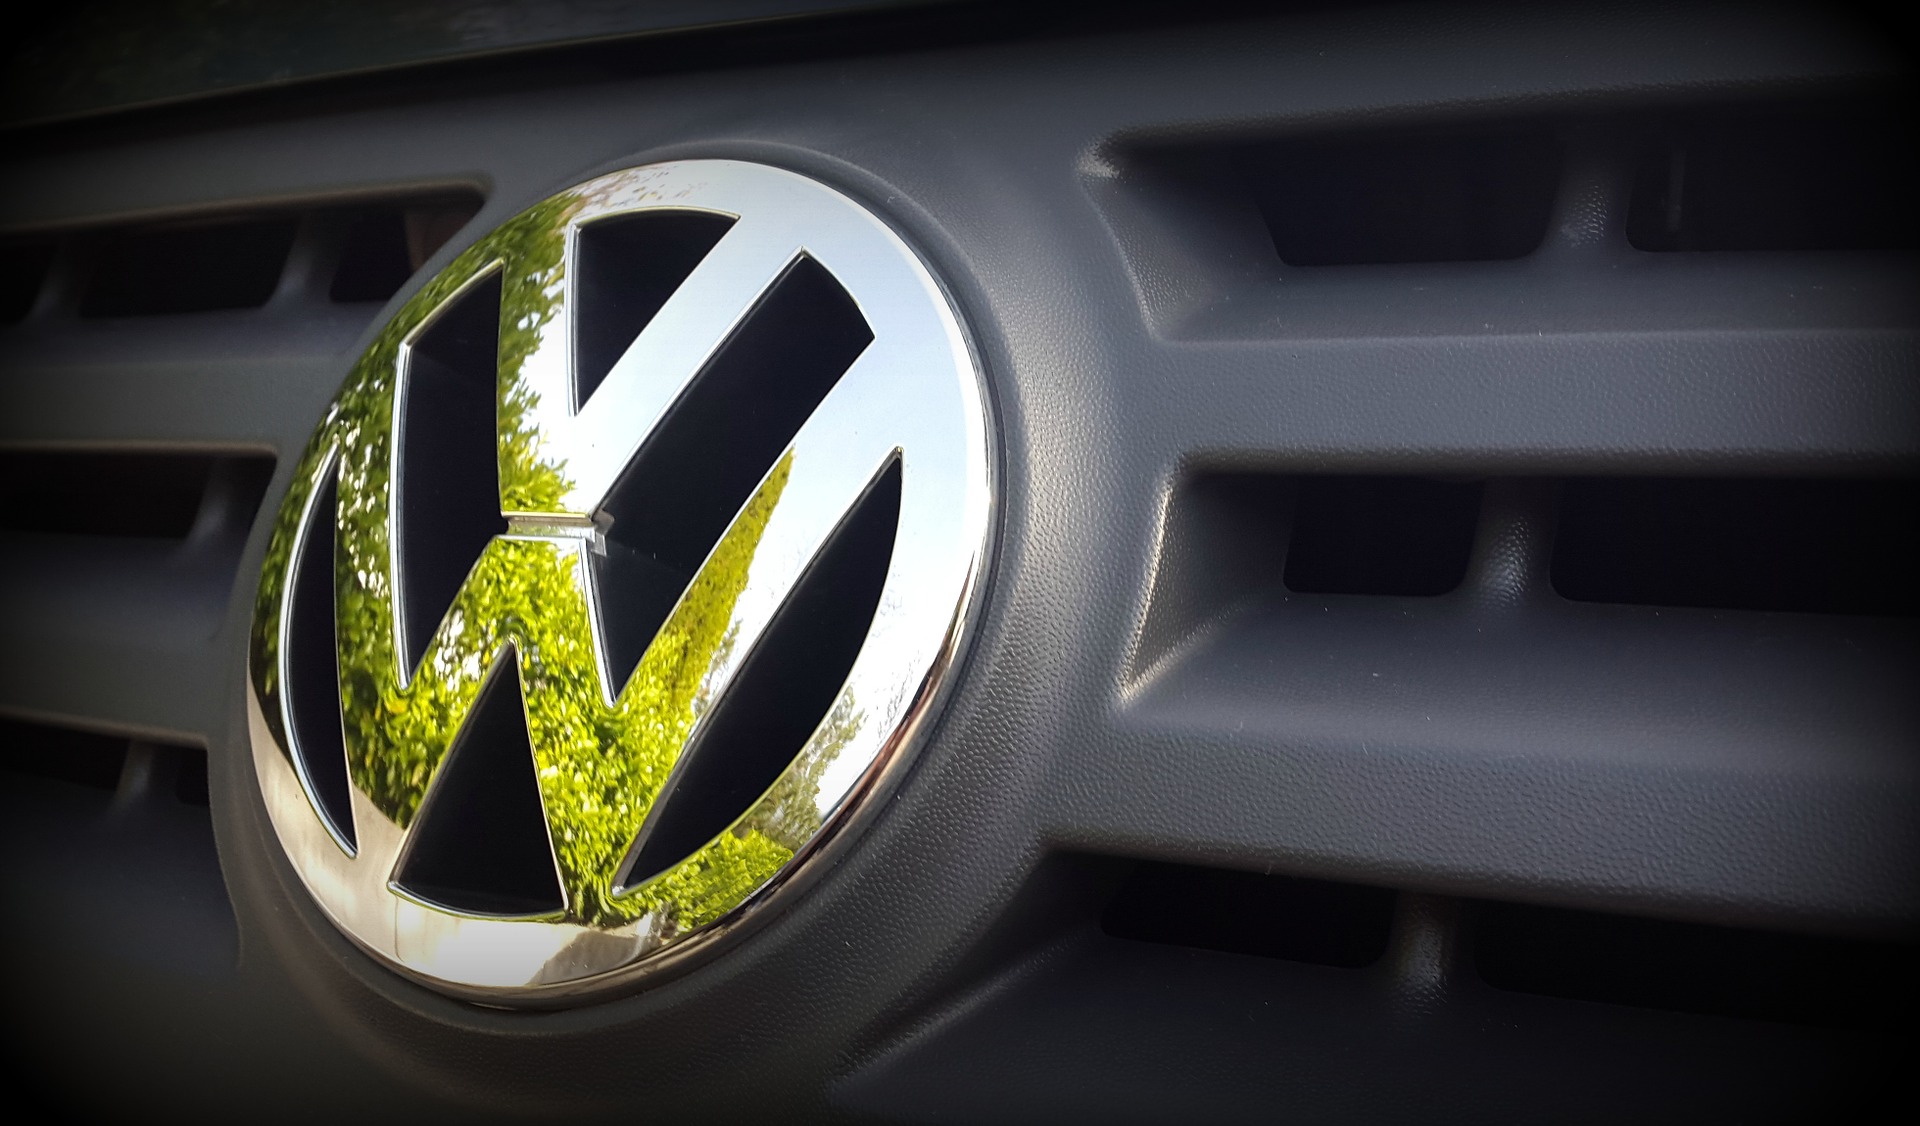   Dieselgate : une action de groupe contre Volkswagen en France